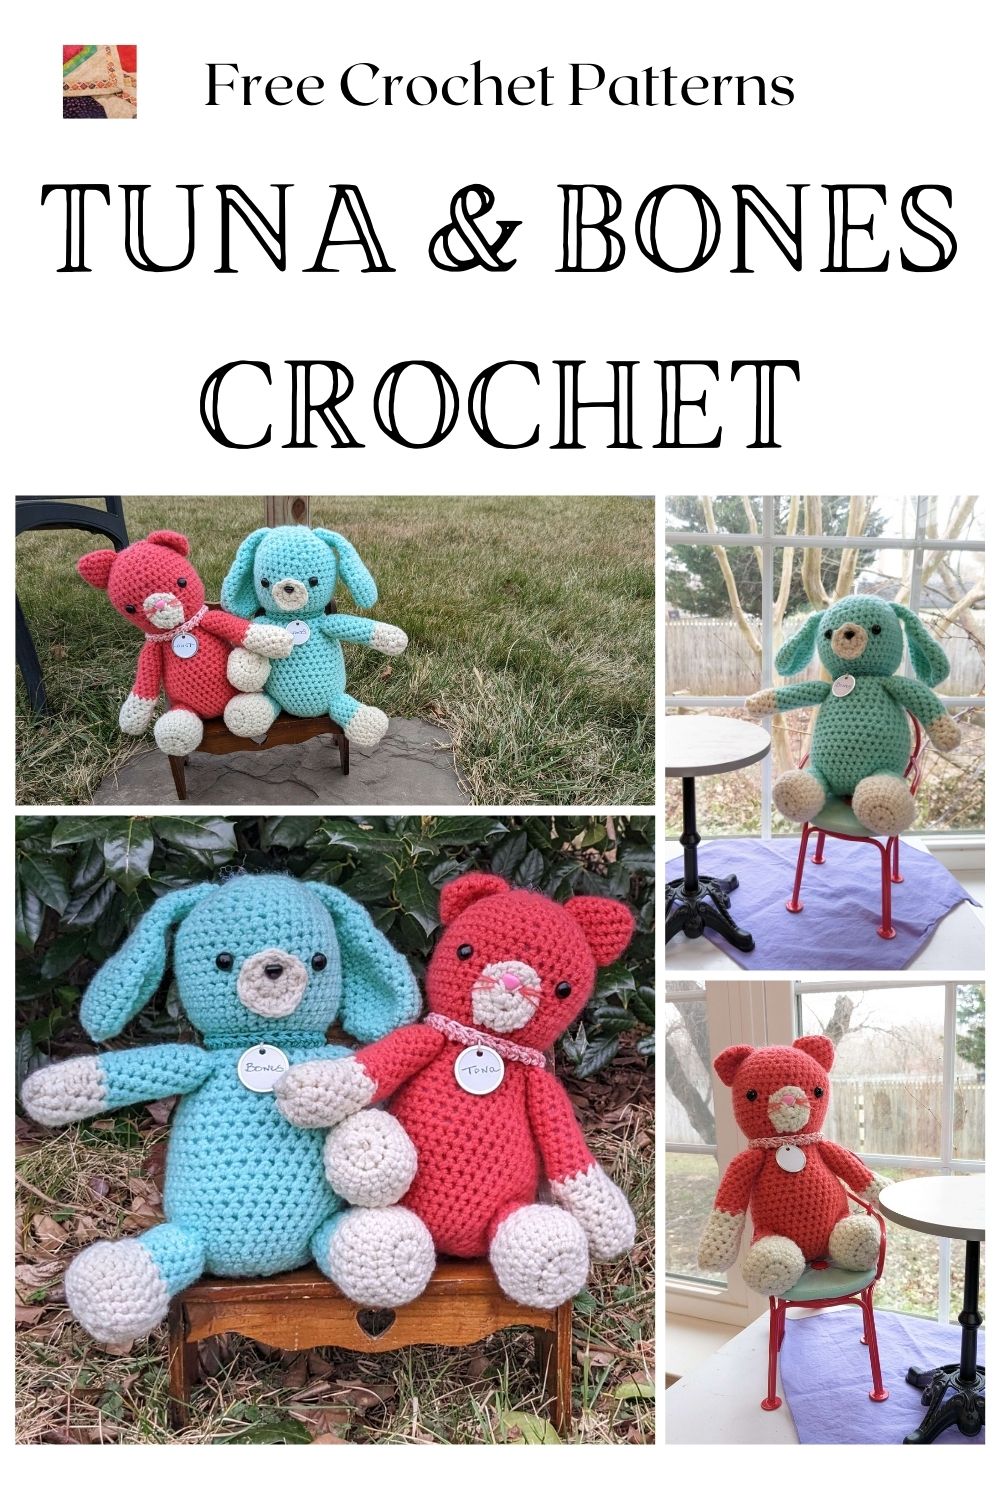 Tuna & Bones Crochet Project - pin 2